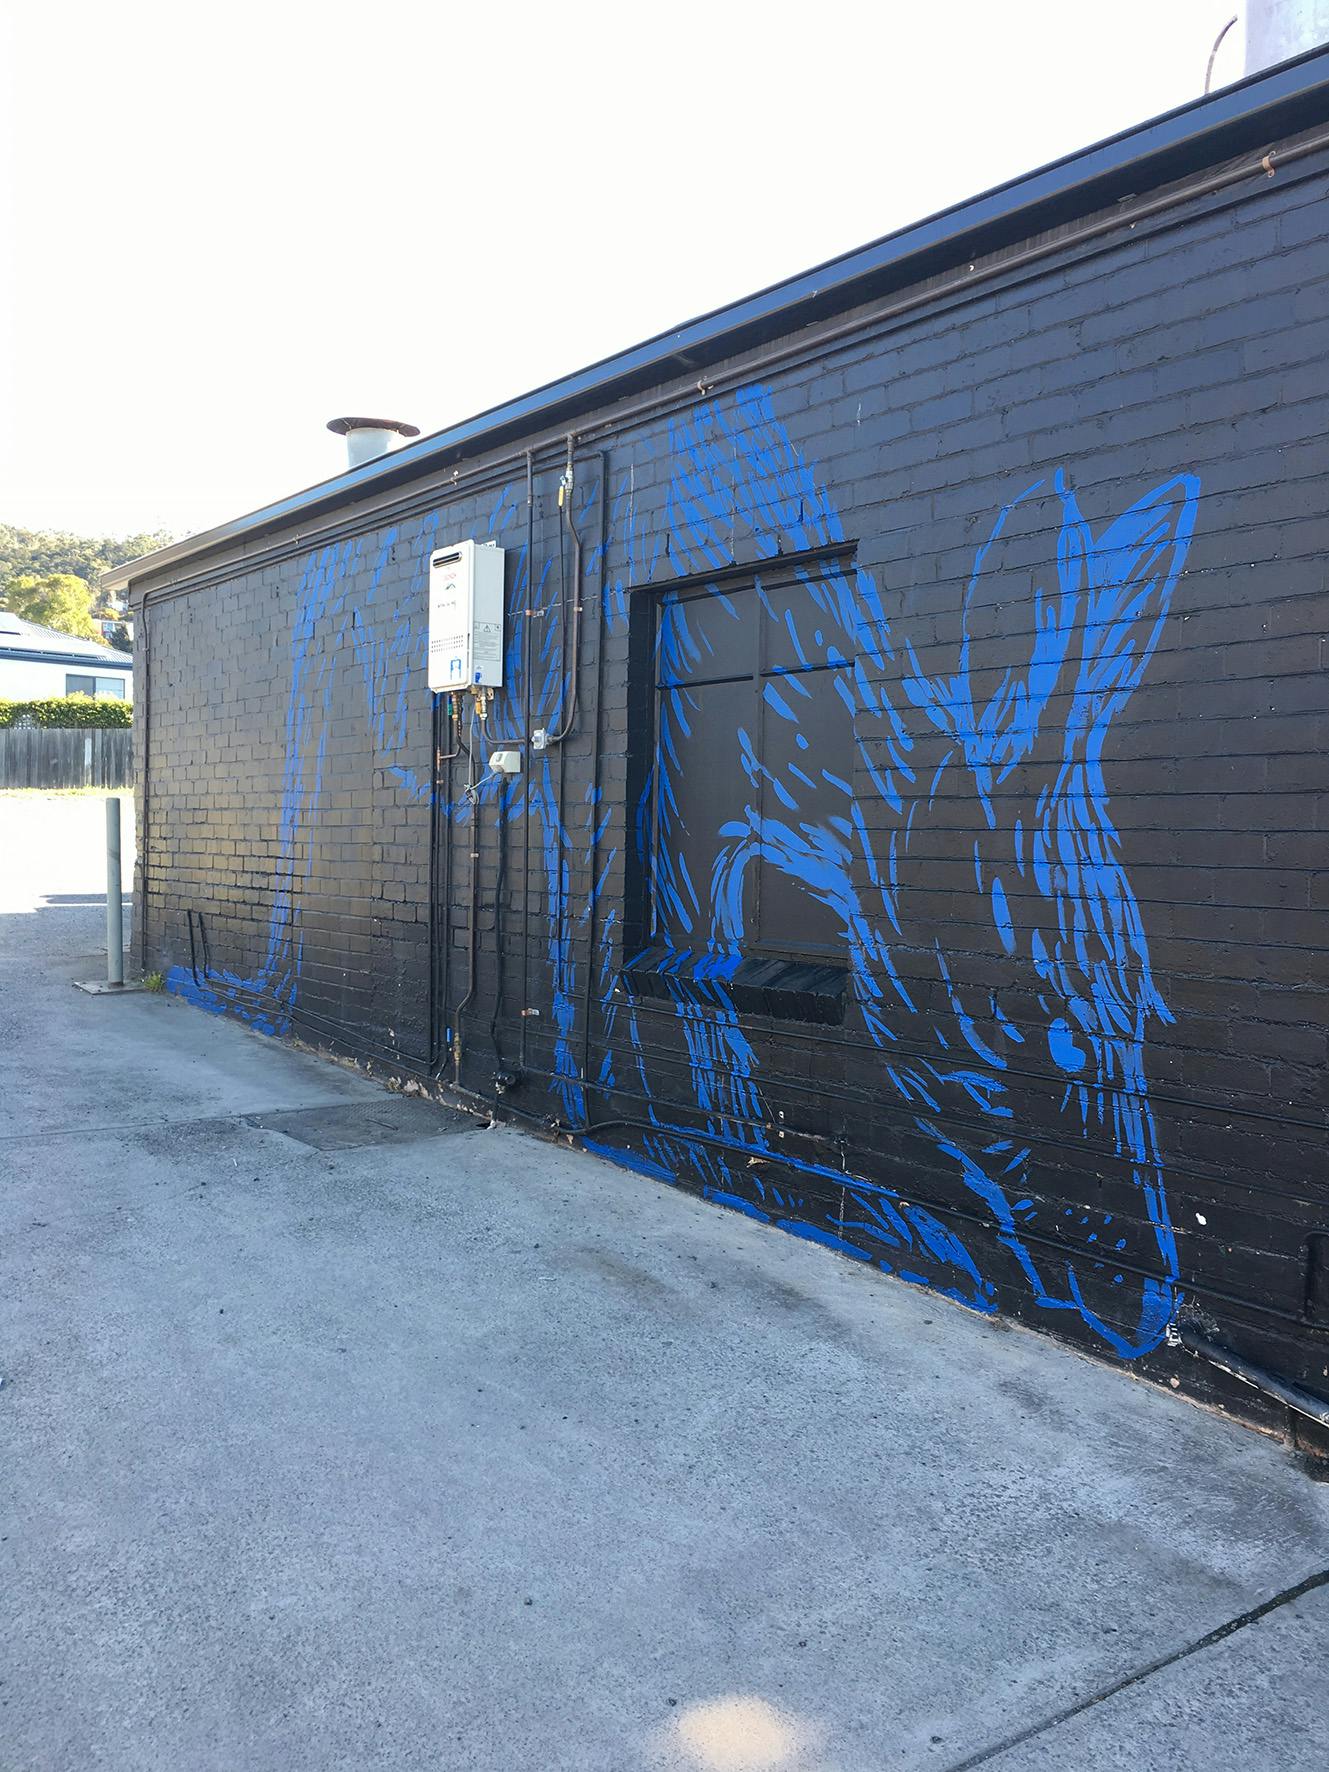 First Mural - Kangaroo